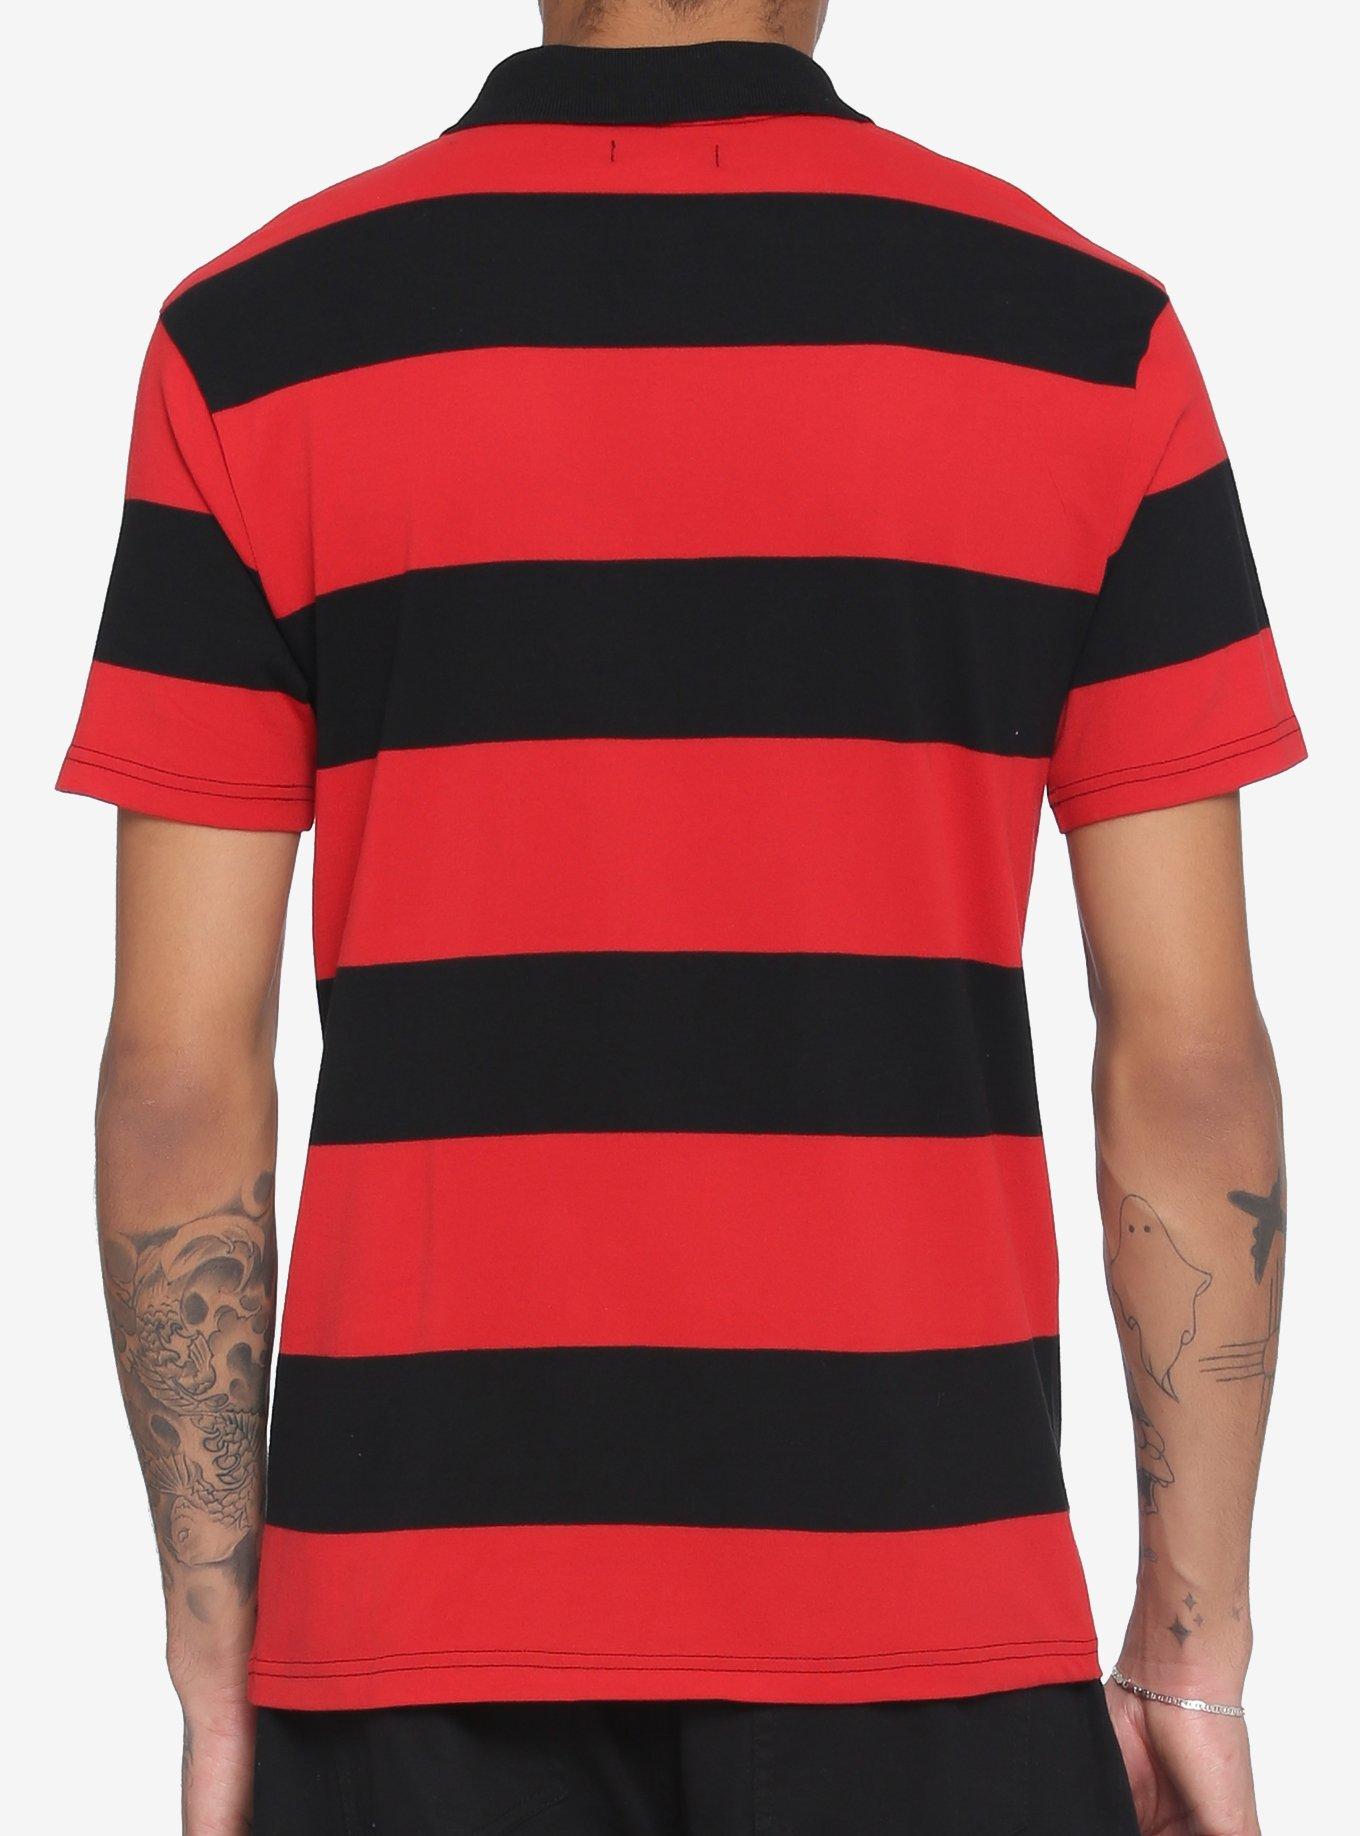 Red & Black Stripe O-Ring Zipper Polo Shirt, STRIPE - RED, alternate